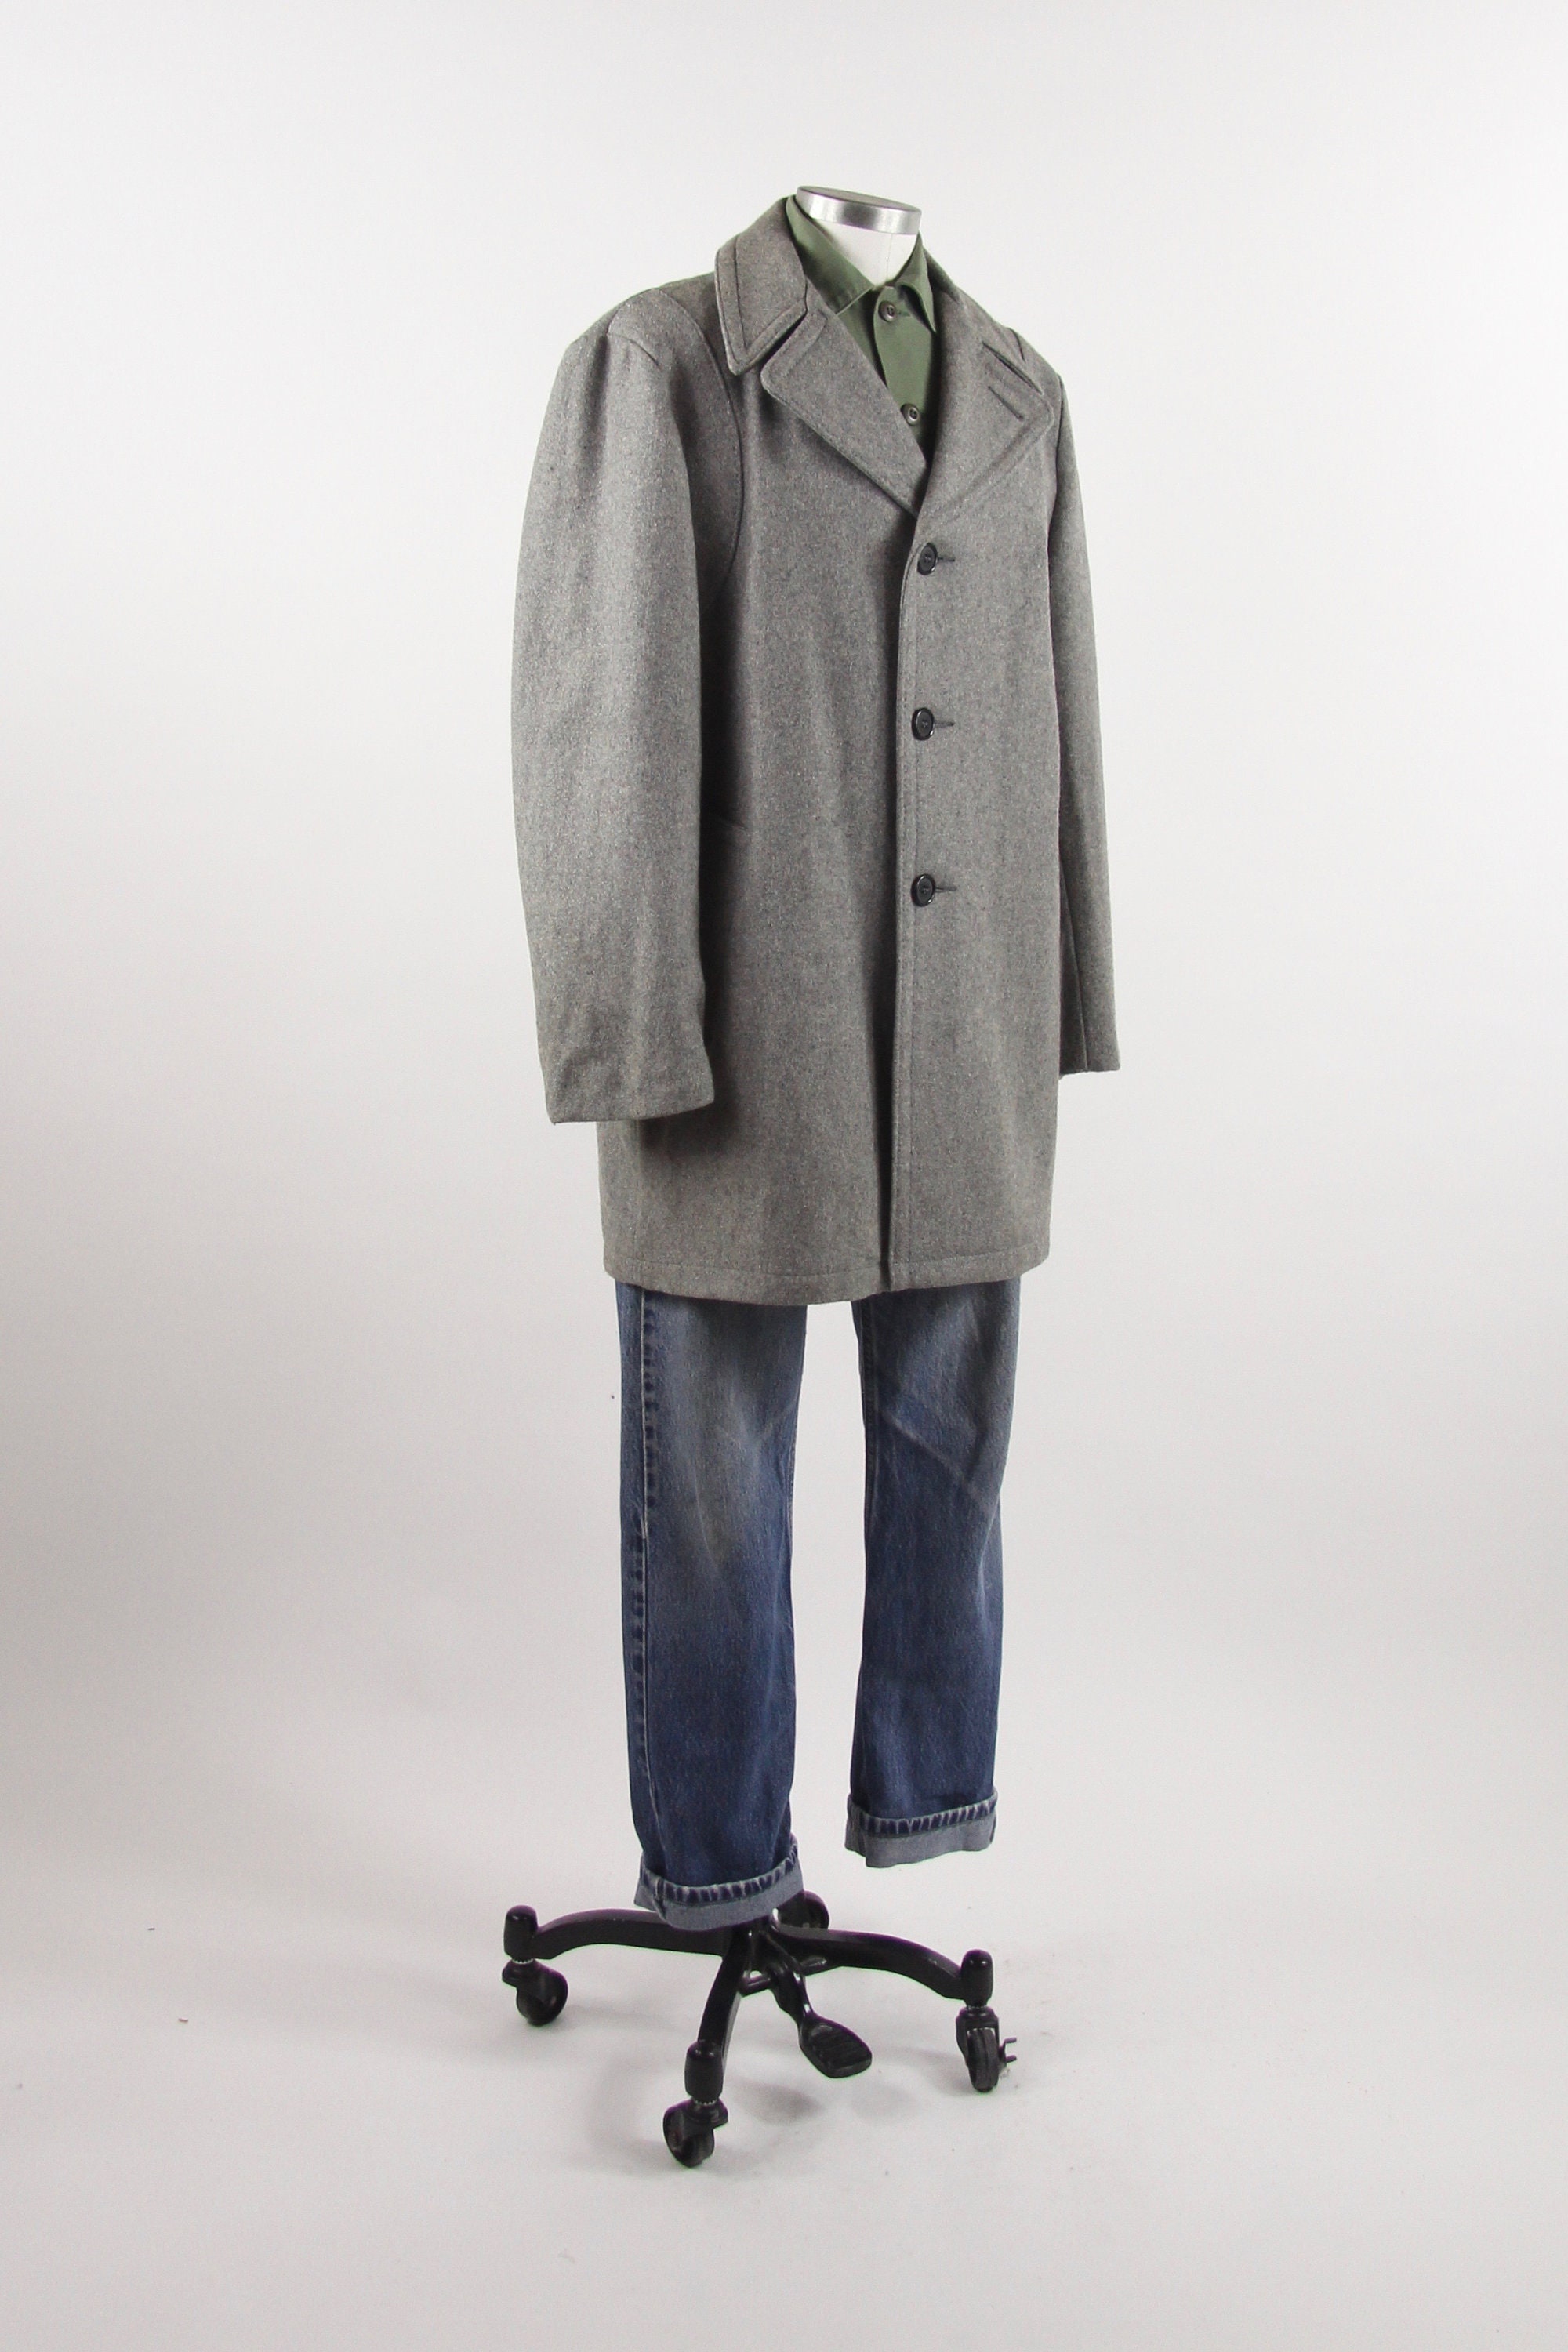 Men's Gray Coat Vintage Wool Peacoat Warm Winter Jacket Size Large 42